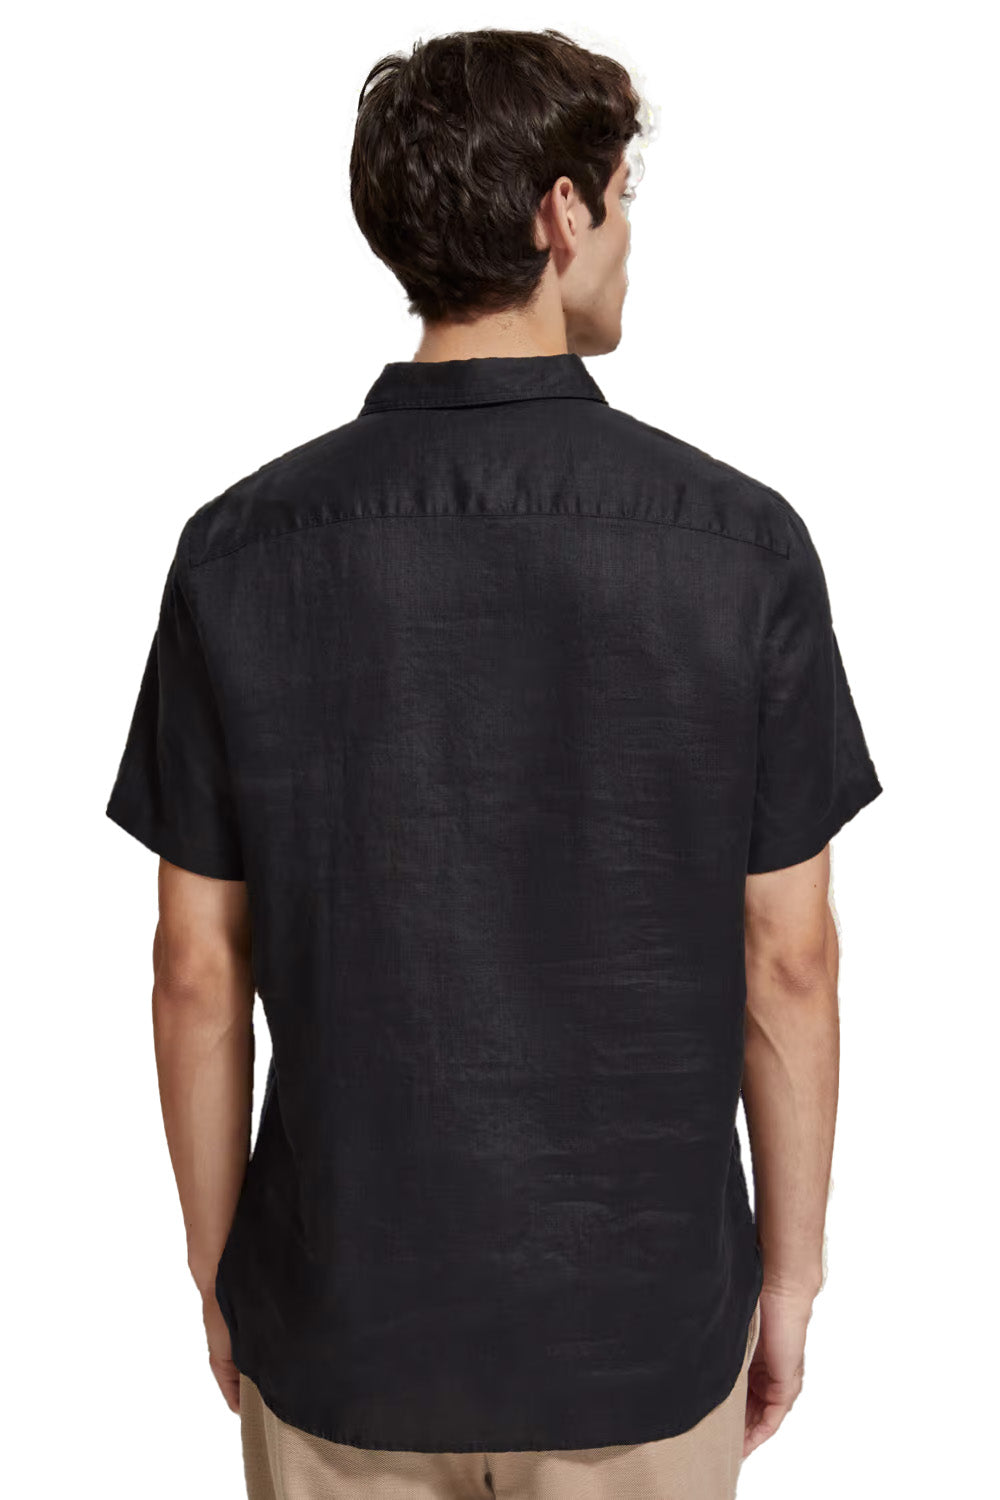 Scotch & Soda - Short Sleeve Linen Shirt - Black - Back